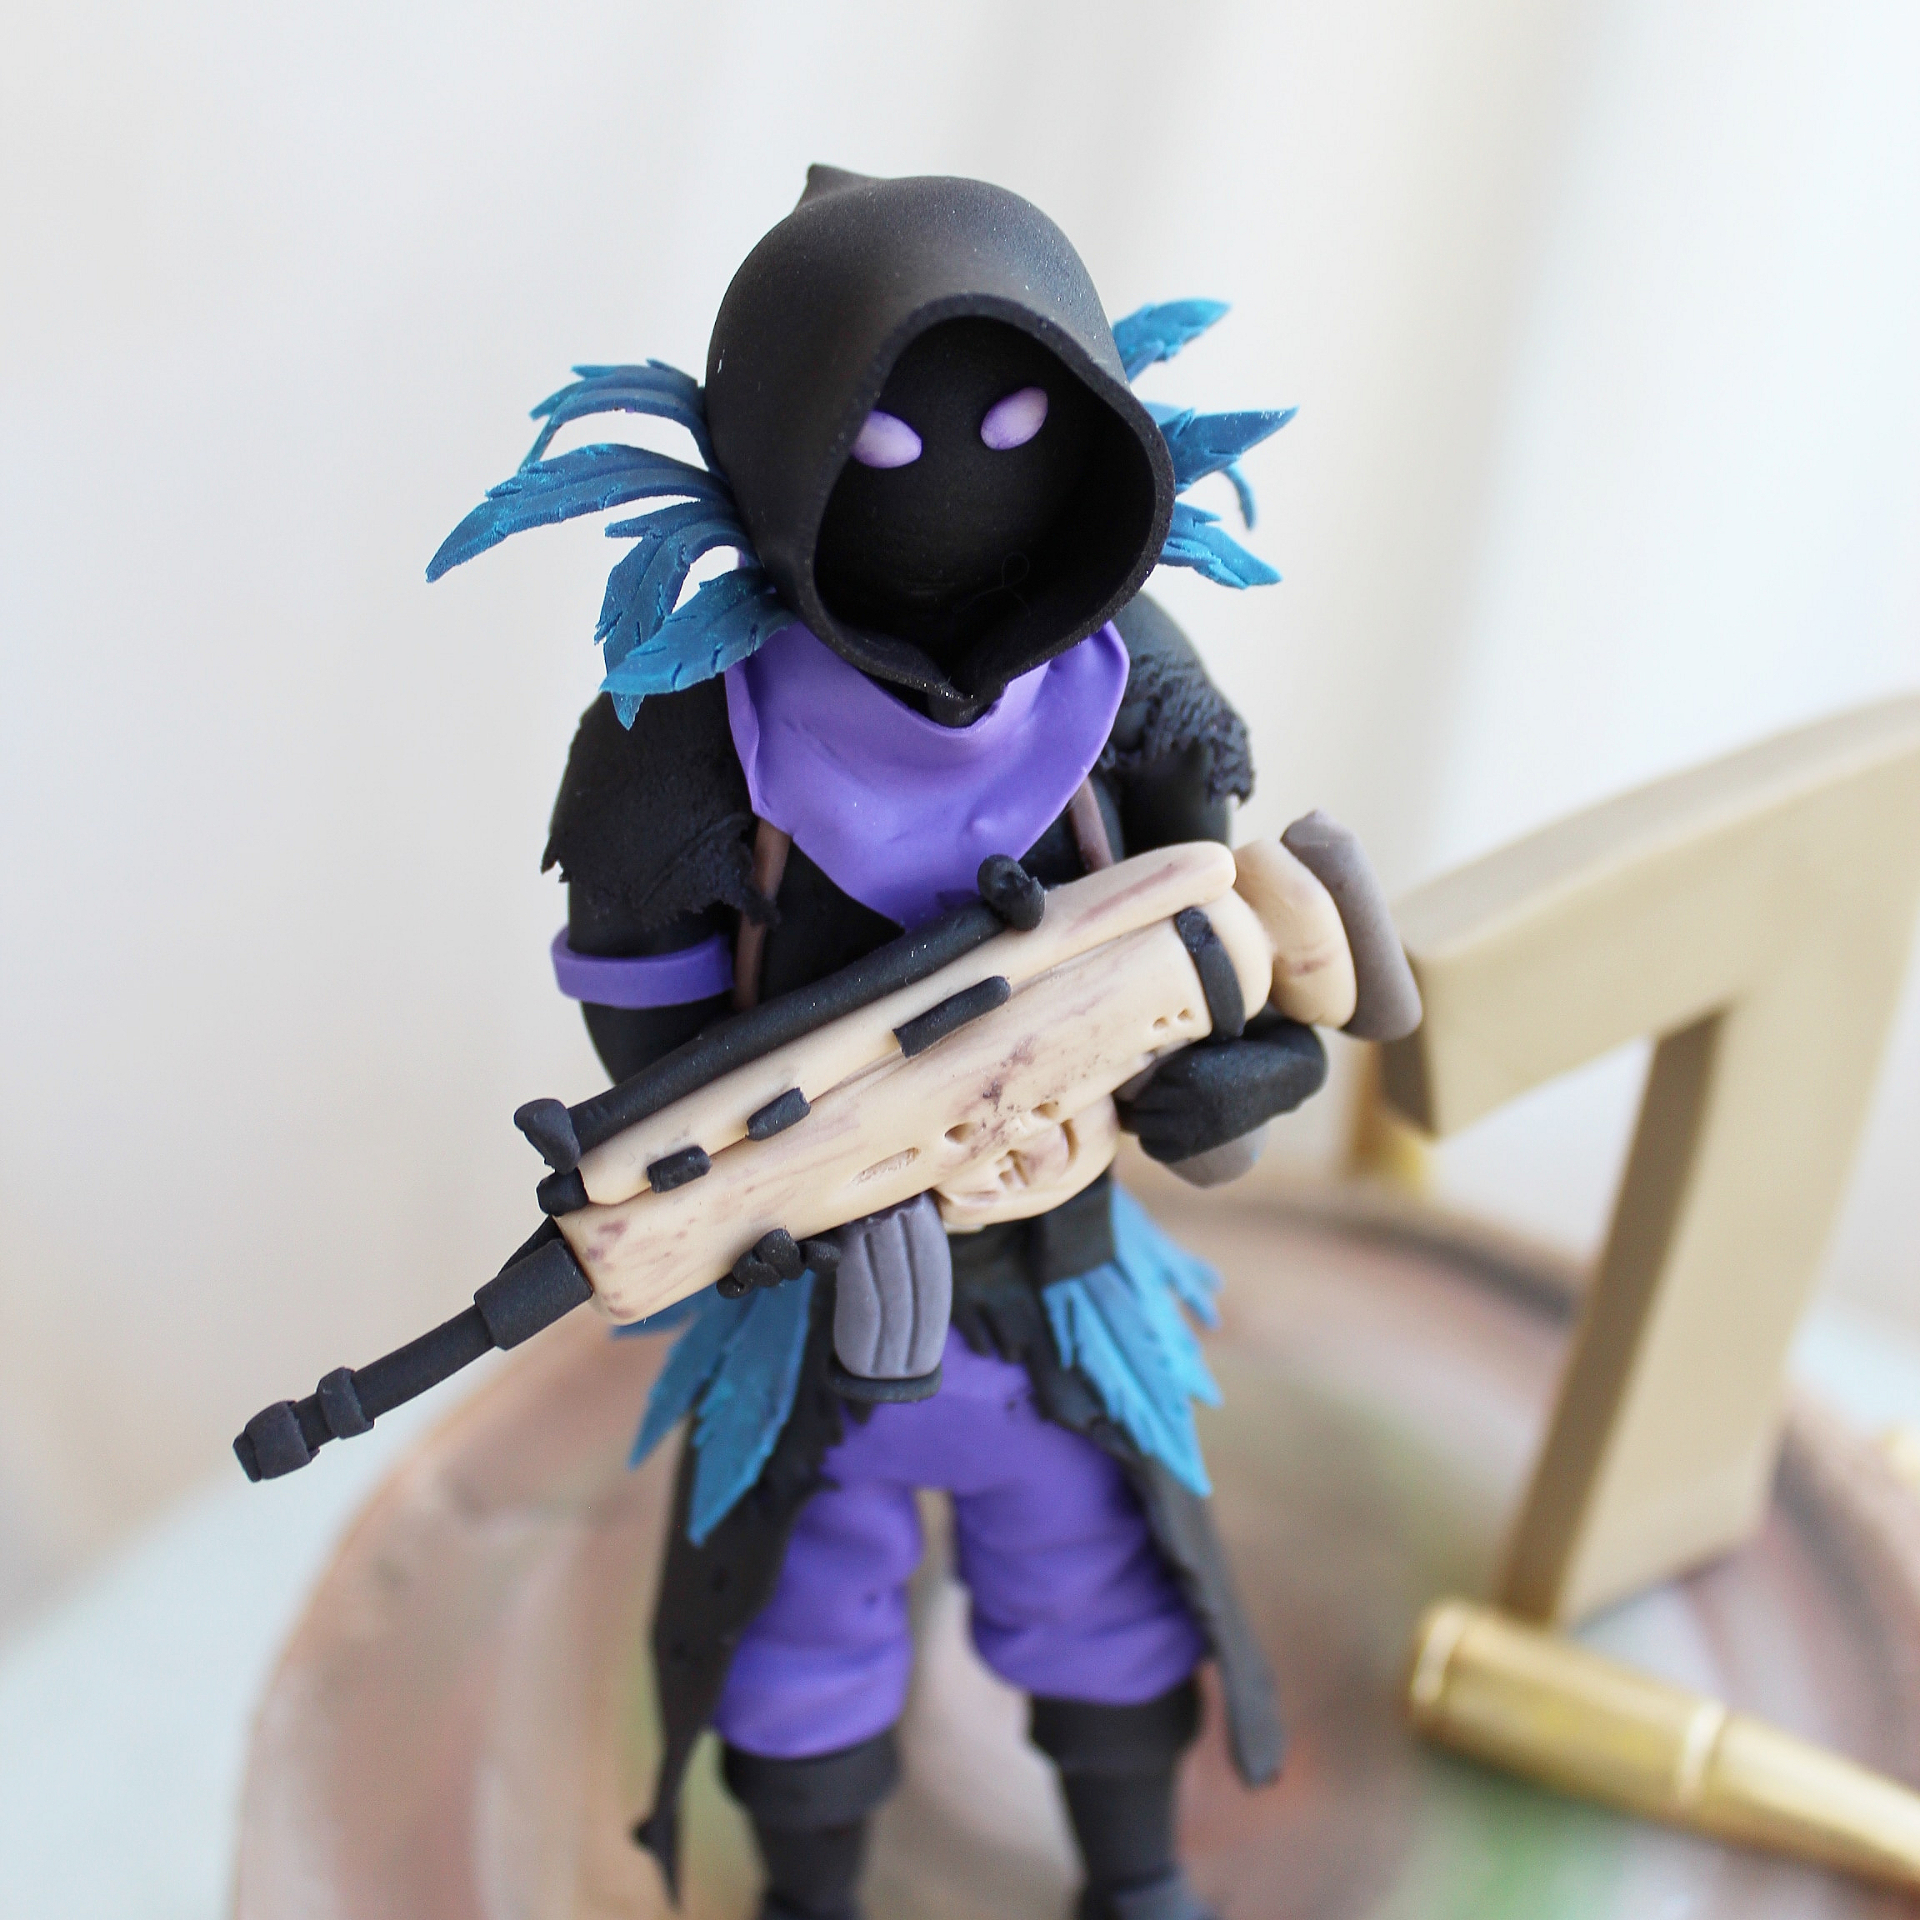 Raven Fortnite figure